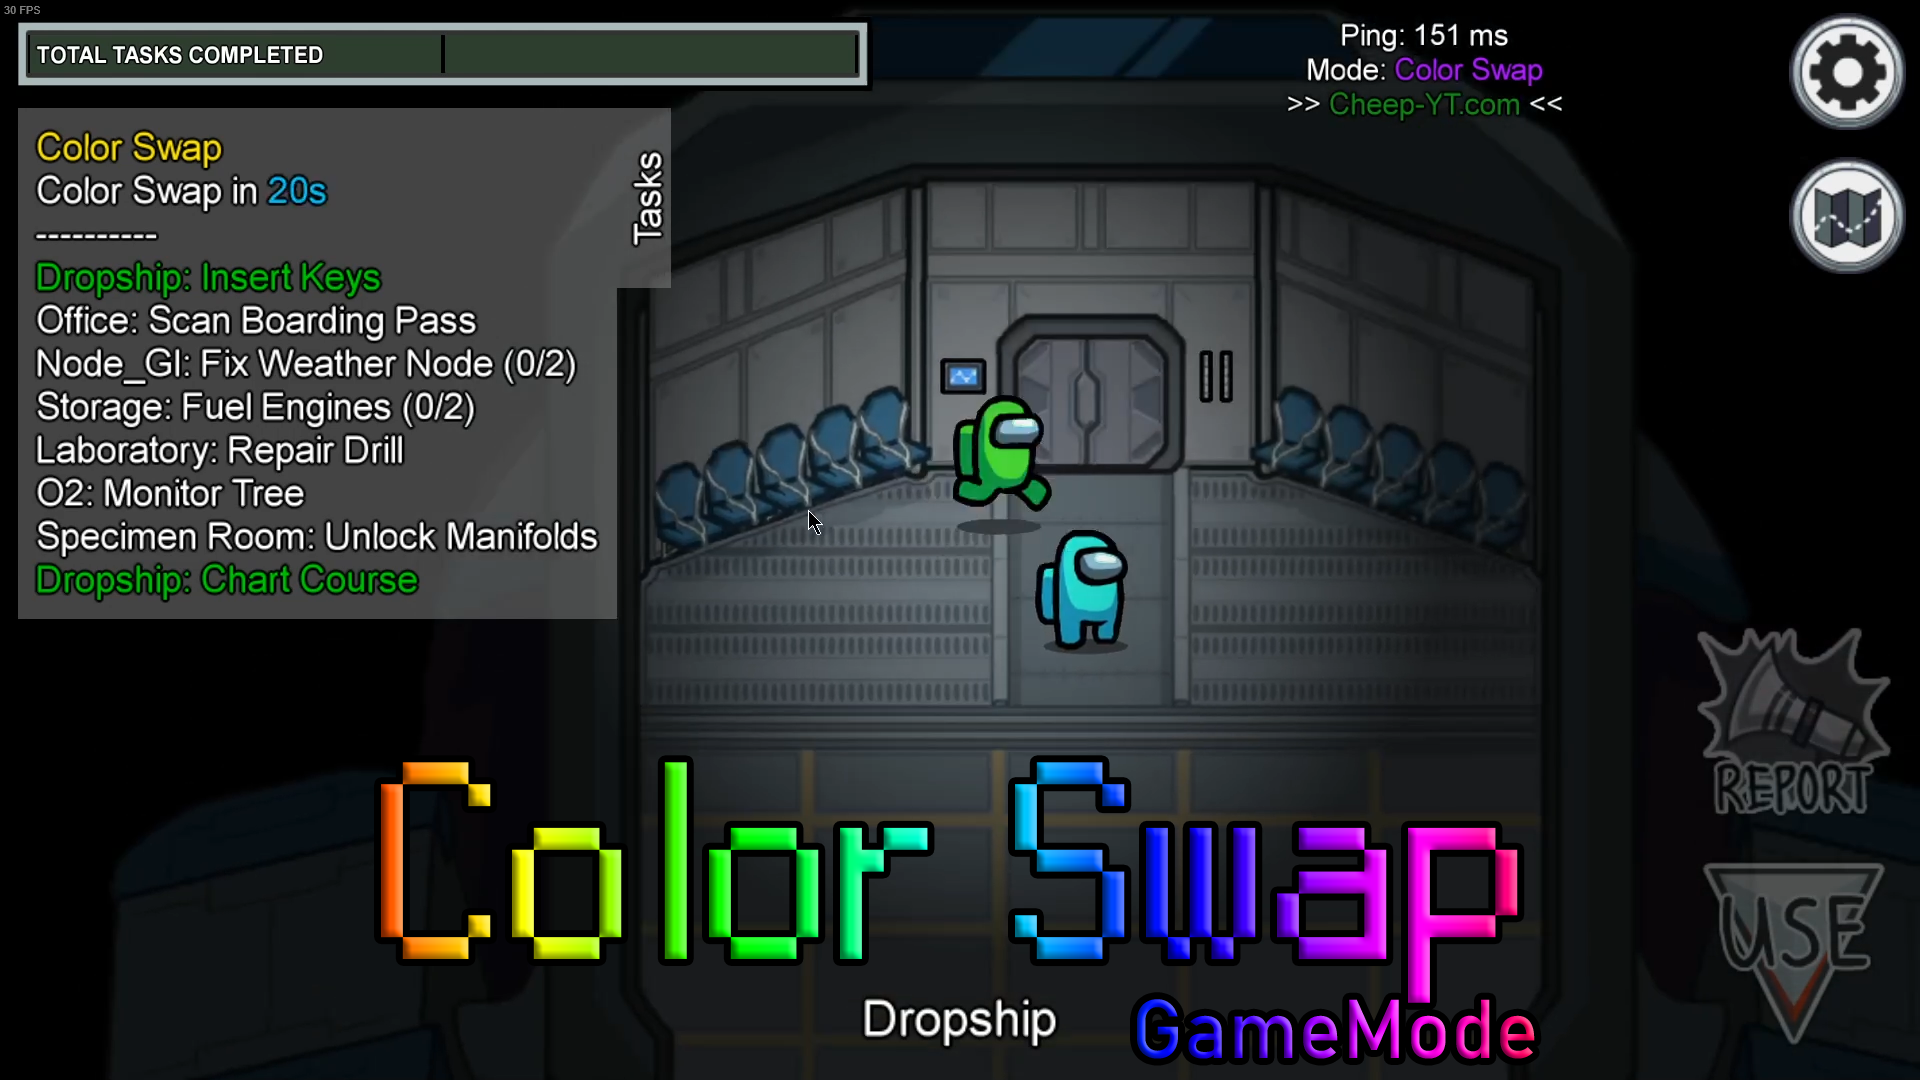 Color Swap Gamemode Cheep Yt Com